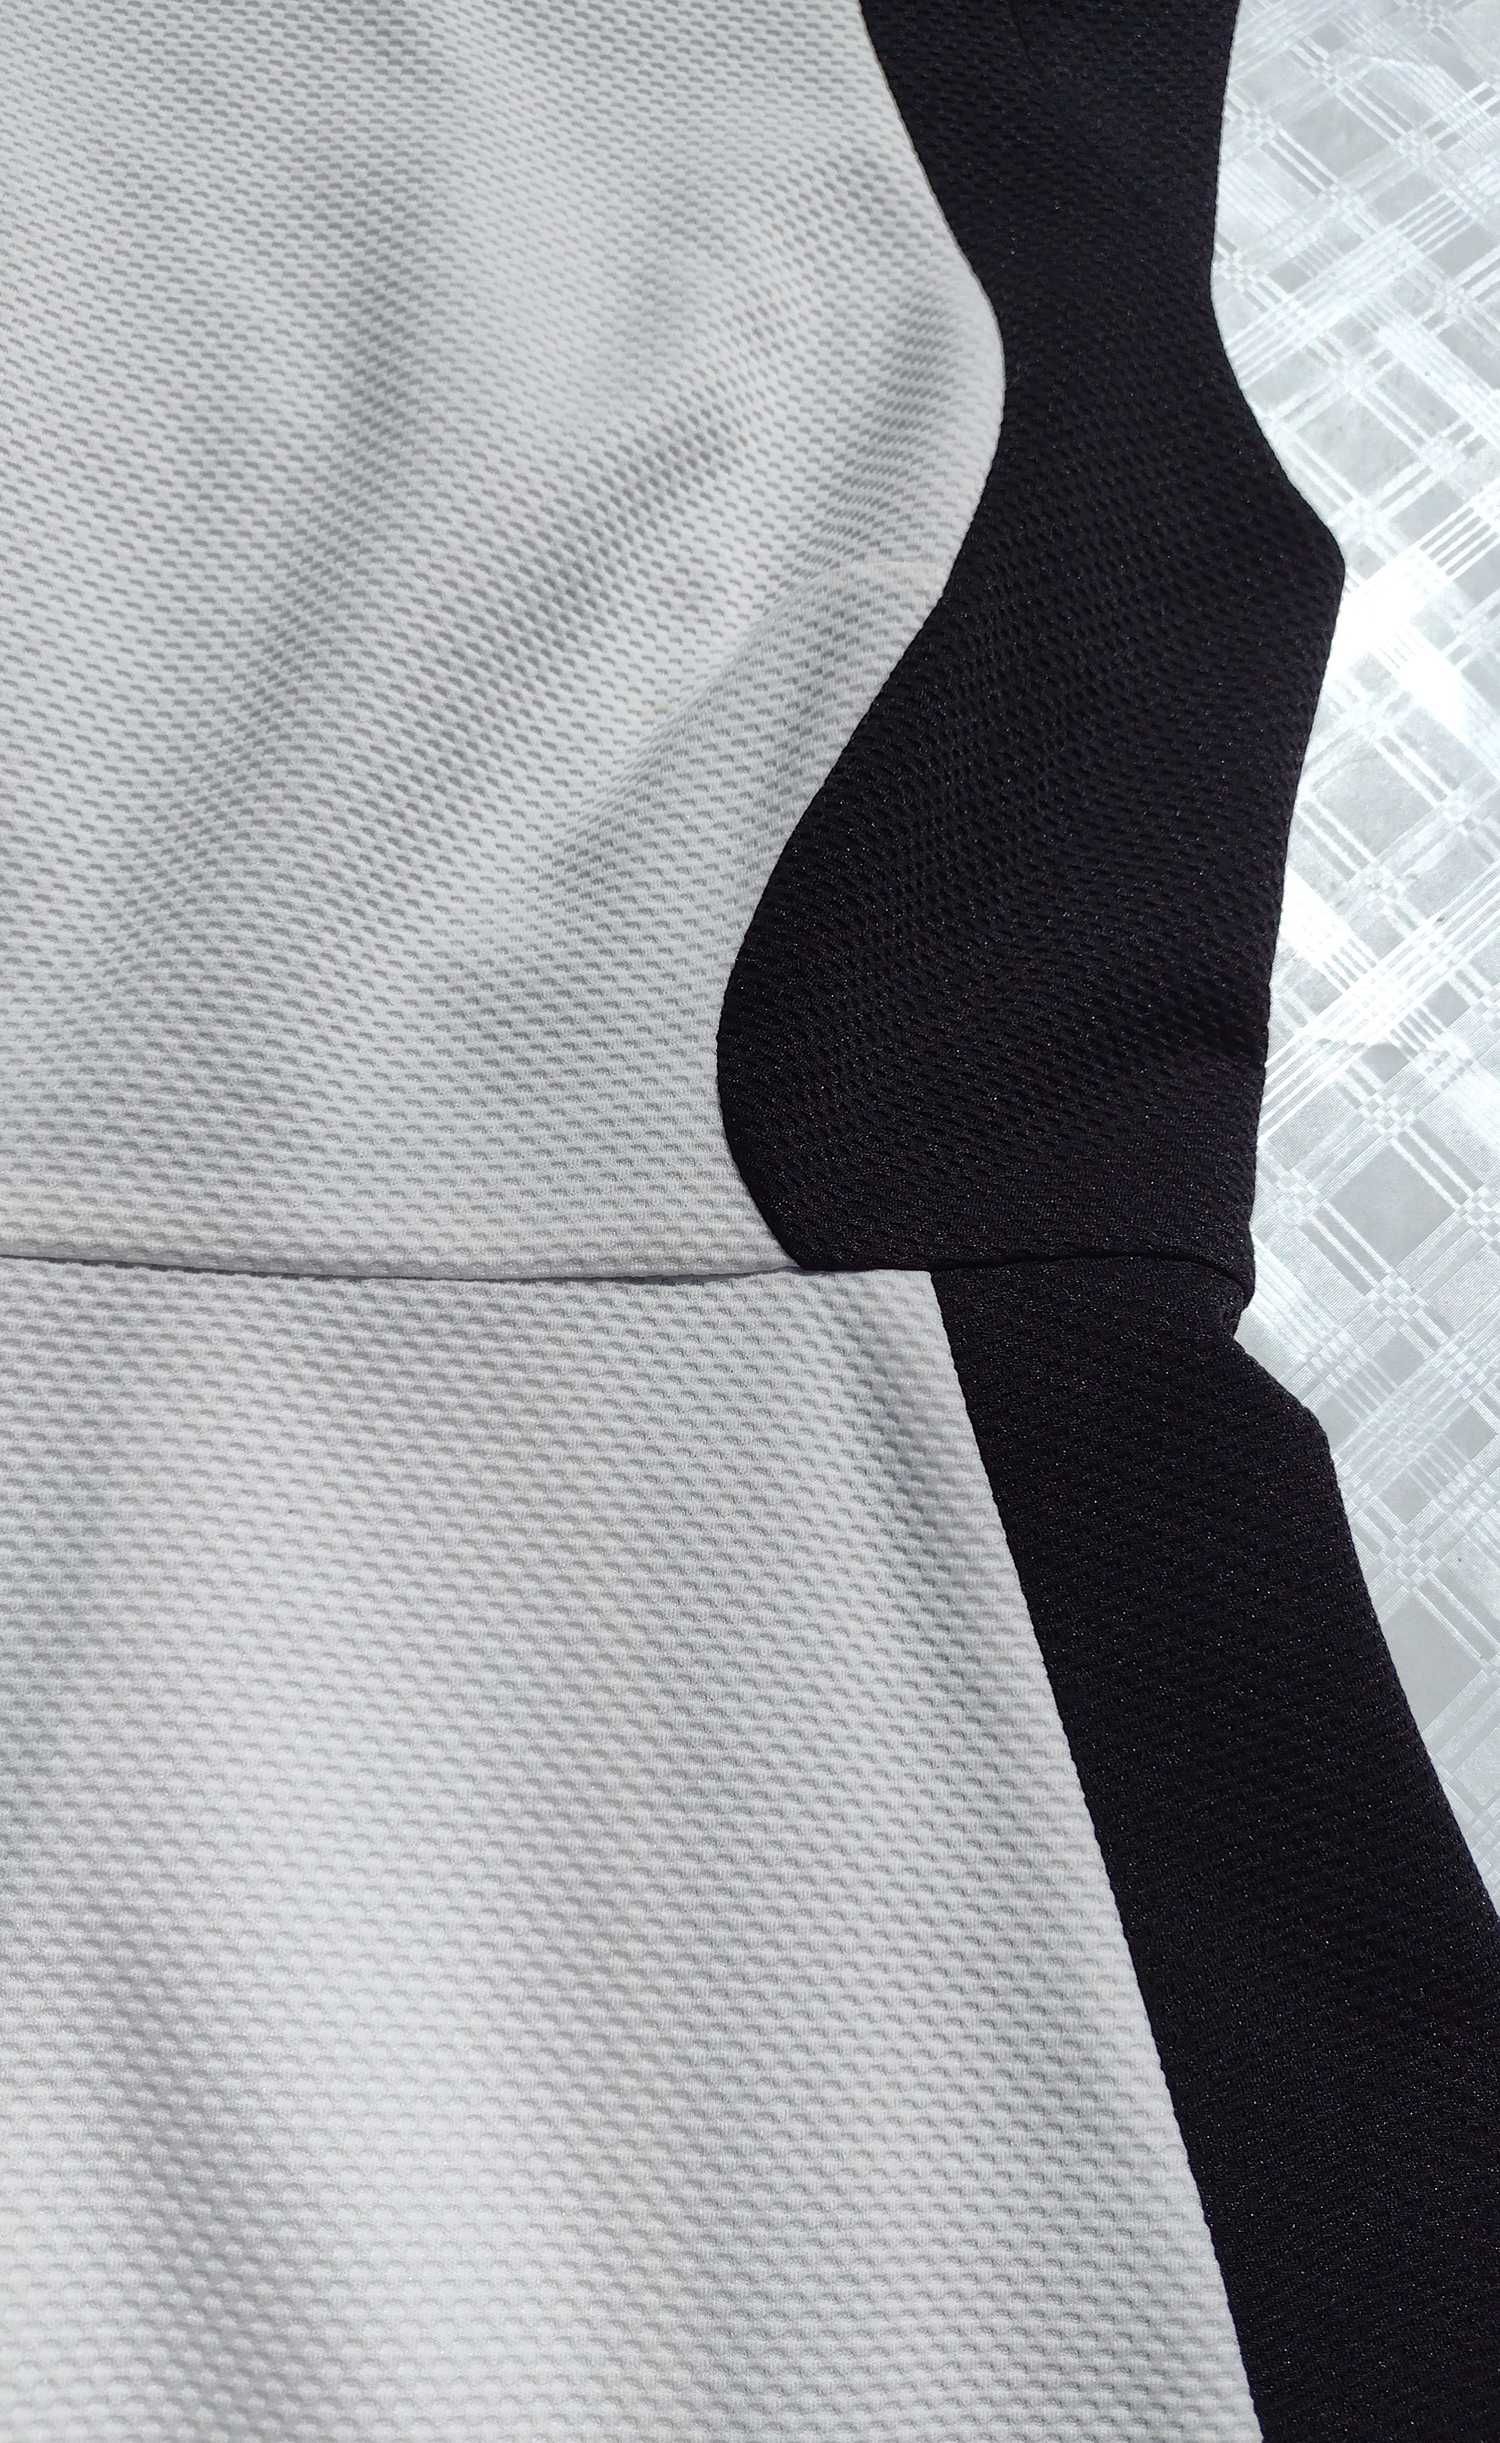 Бело-чёрное платье Jacky Luxury M размер